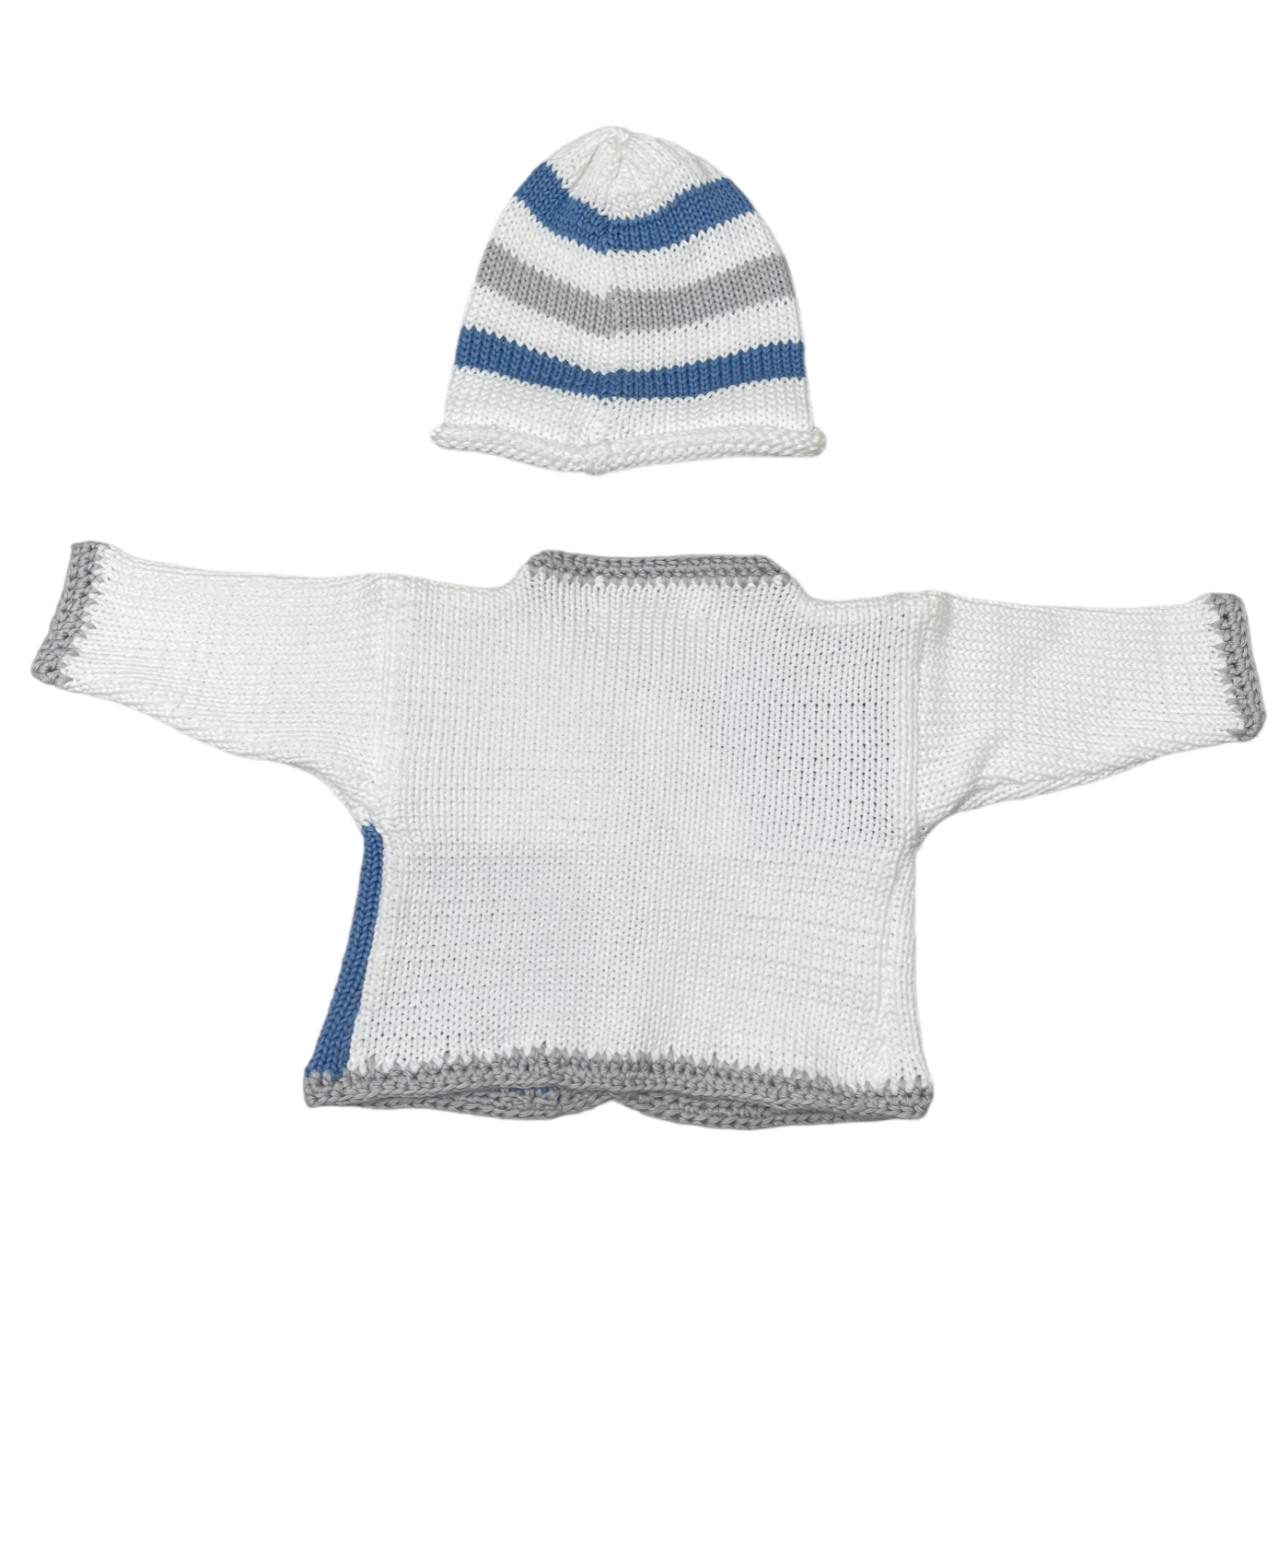 Gita Accessories Color Blocked Sweater Set